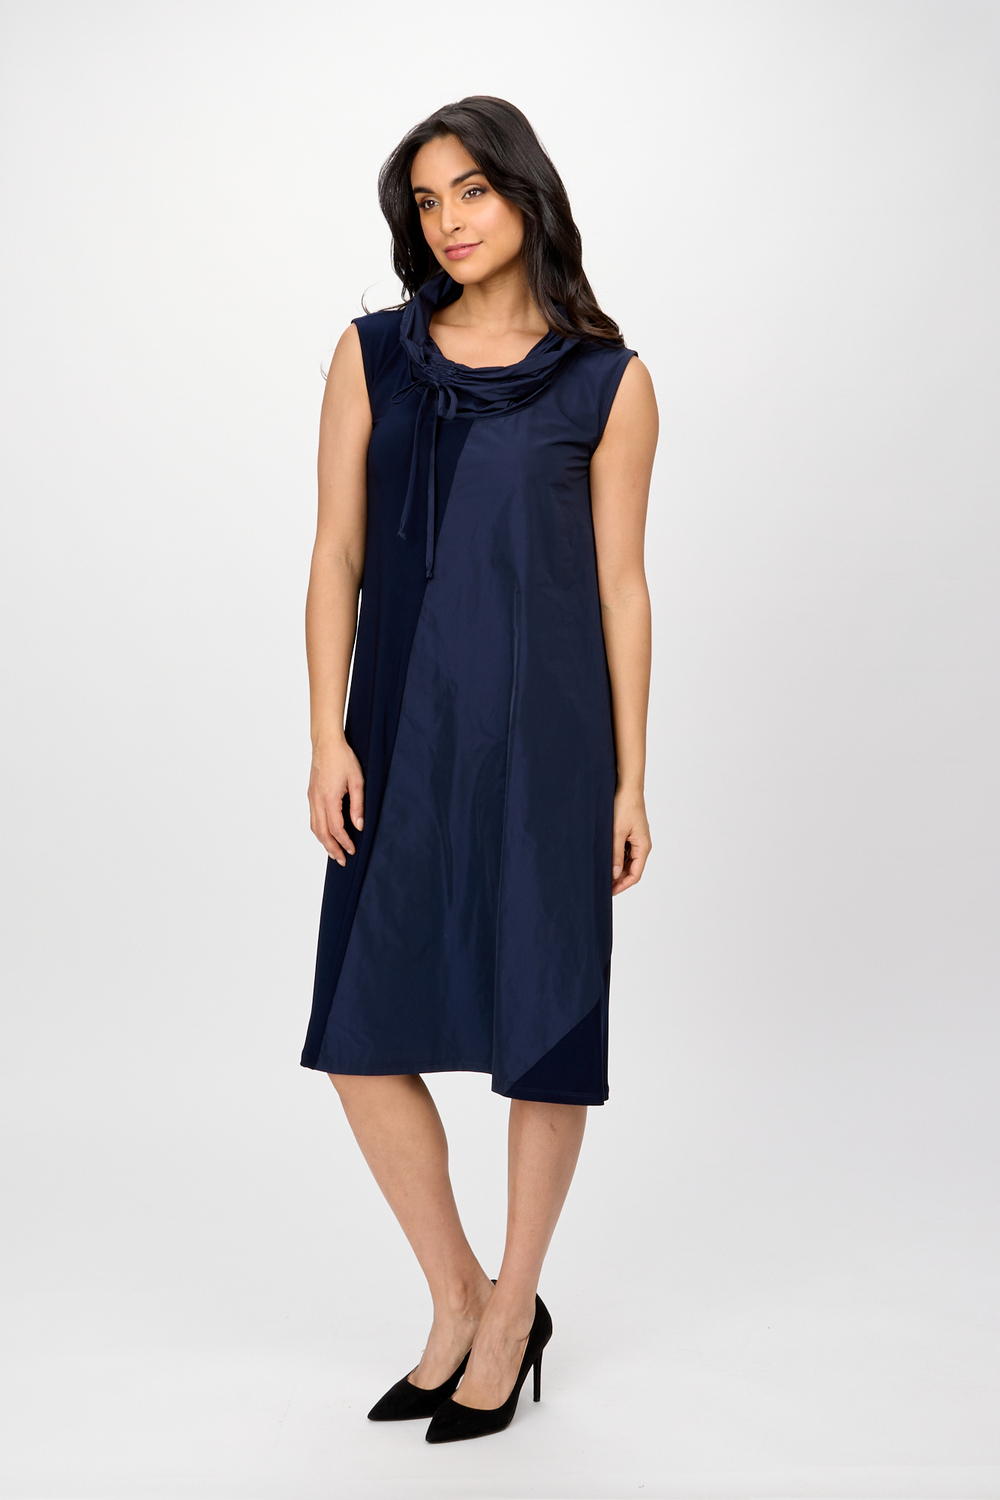 Shawl Collar Dress Style 242067. Midnight Blue